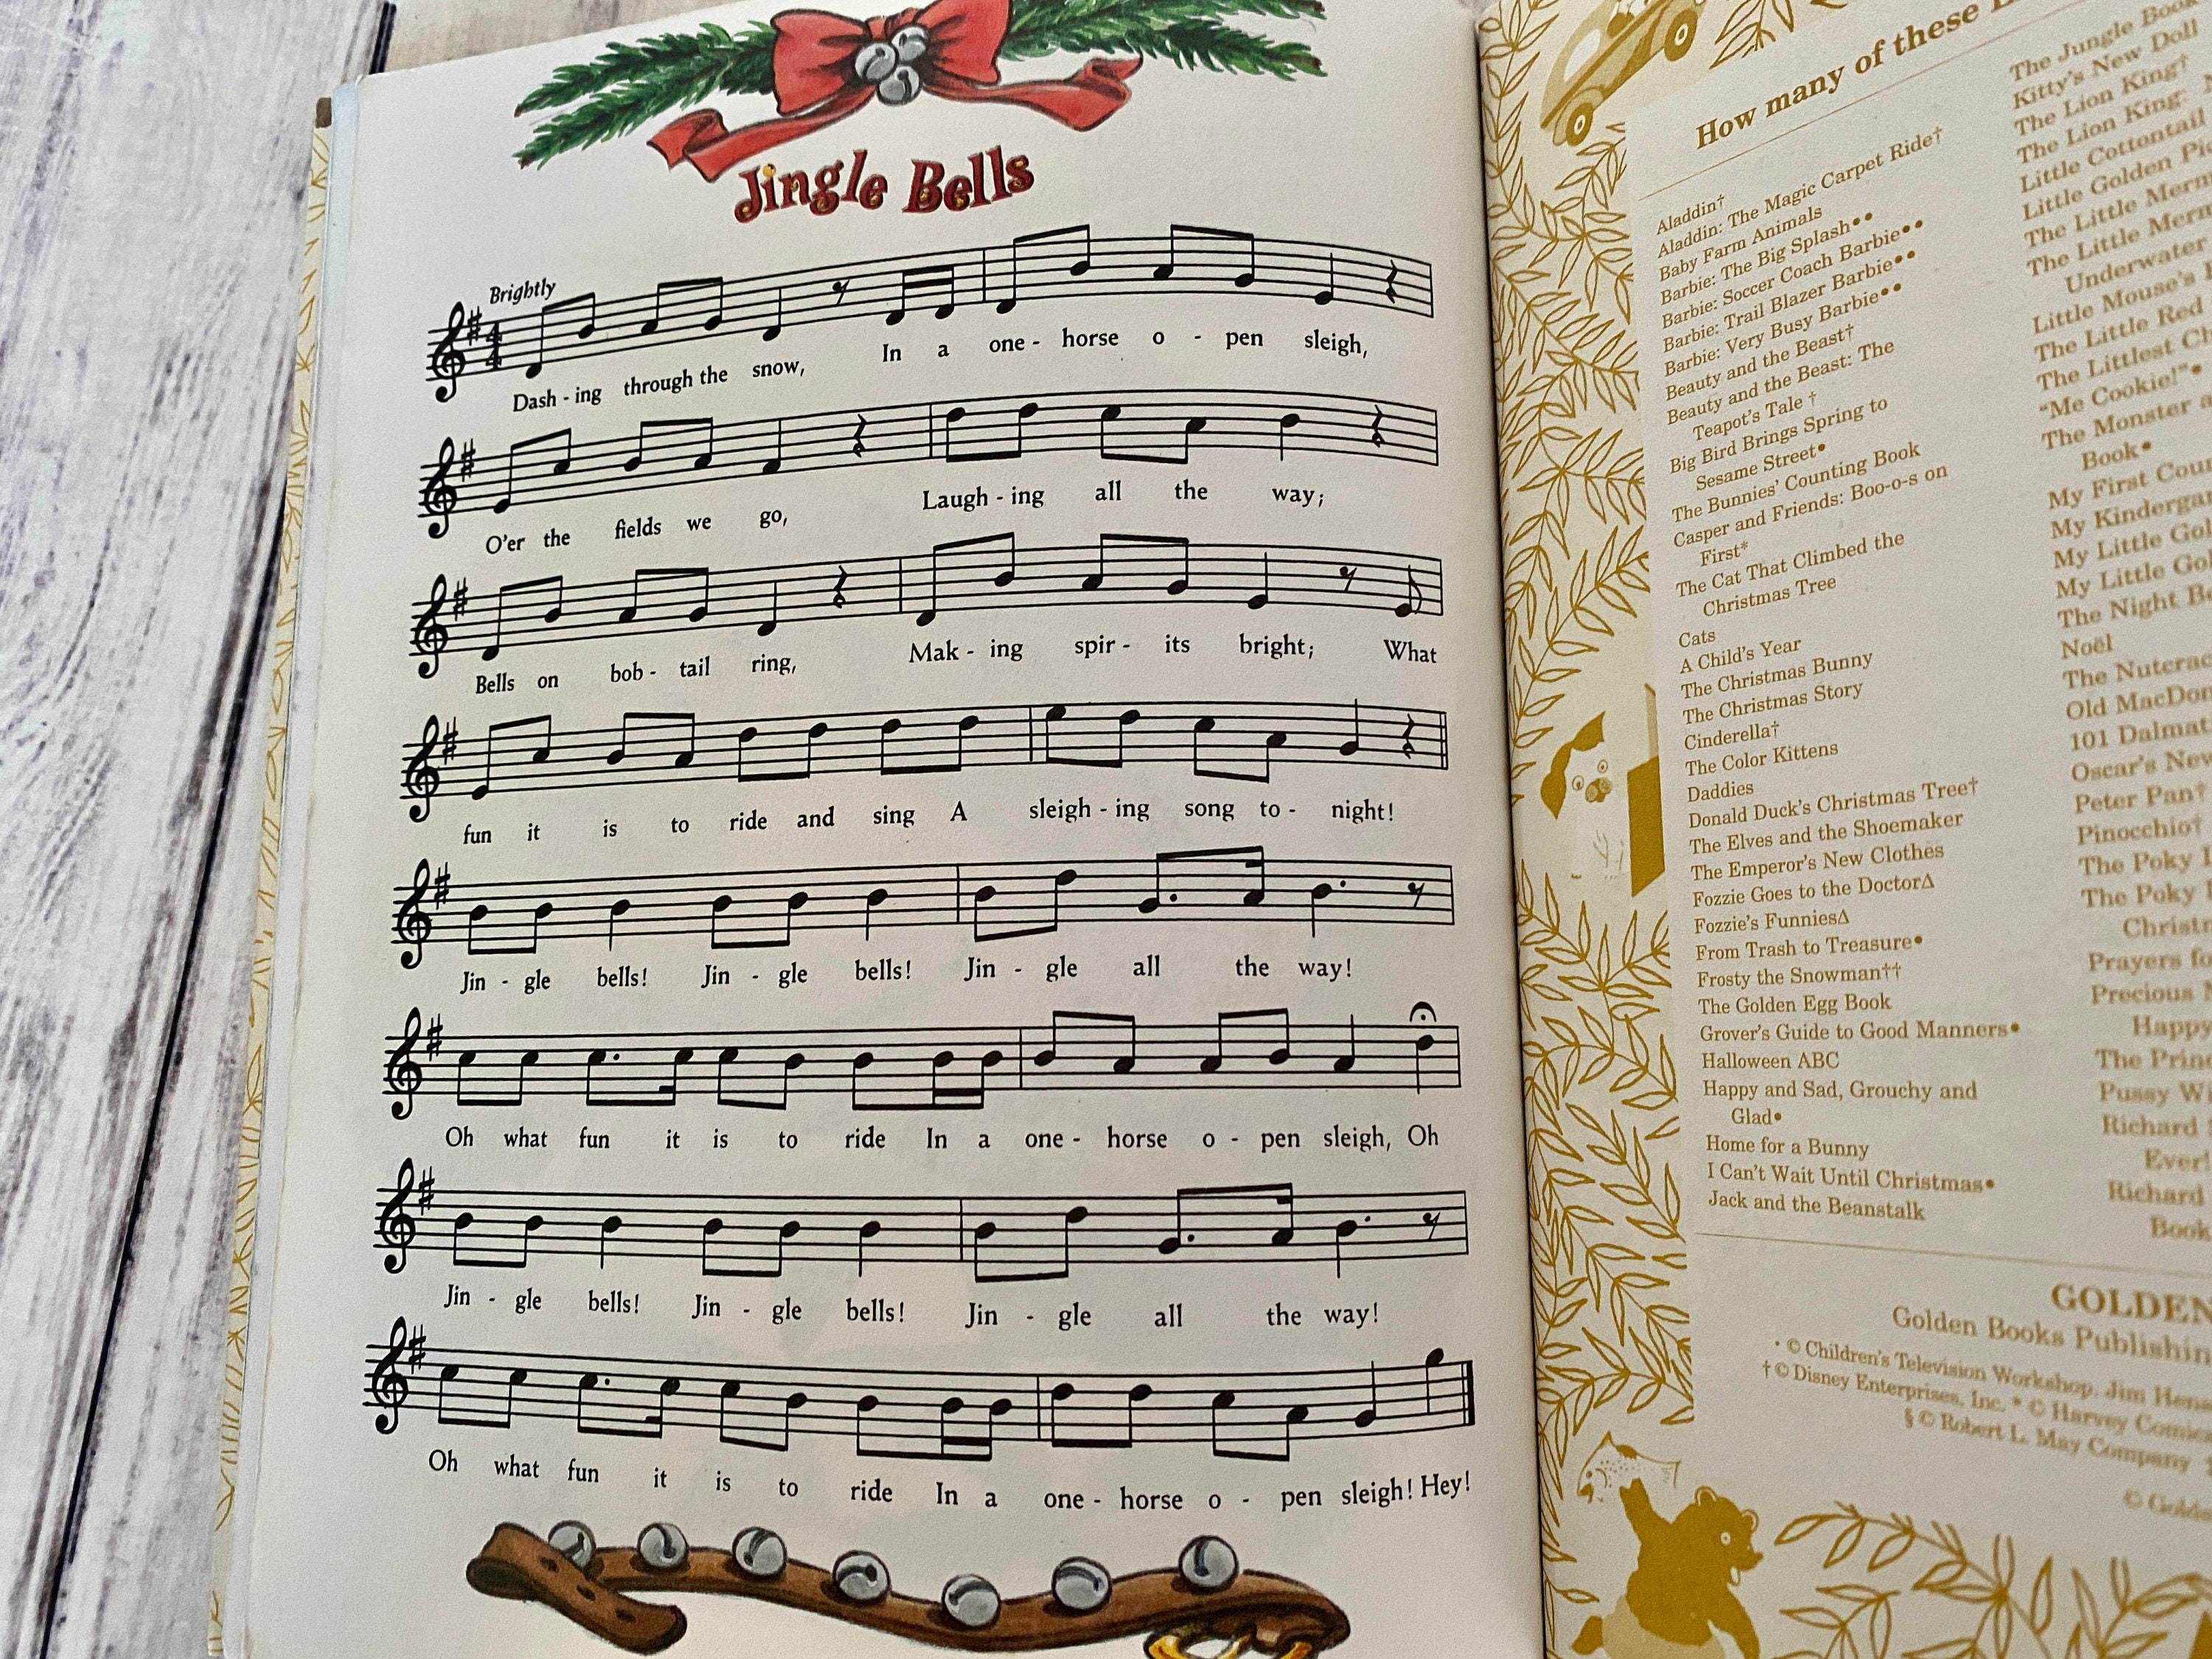 Jingle Bells: A Classic Christmas Book for Kids (Little Golden Book)